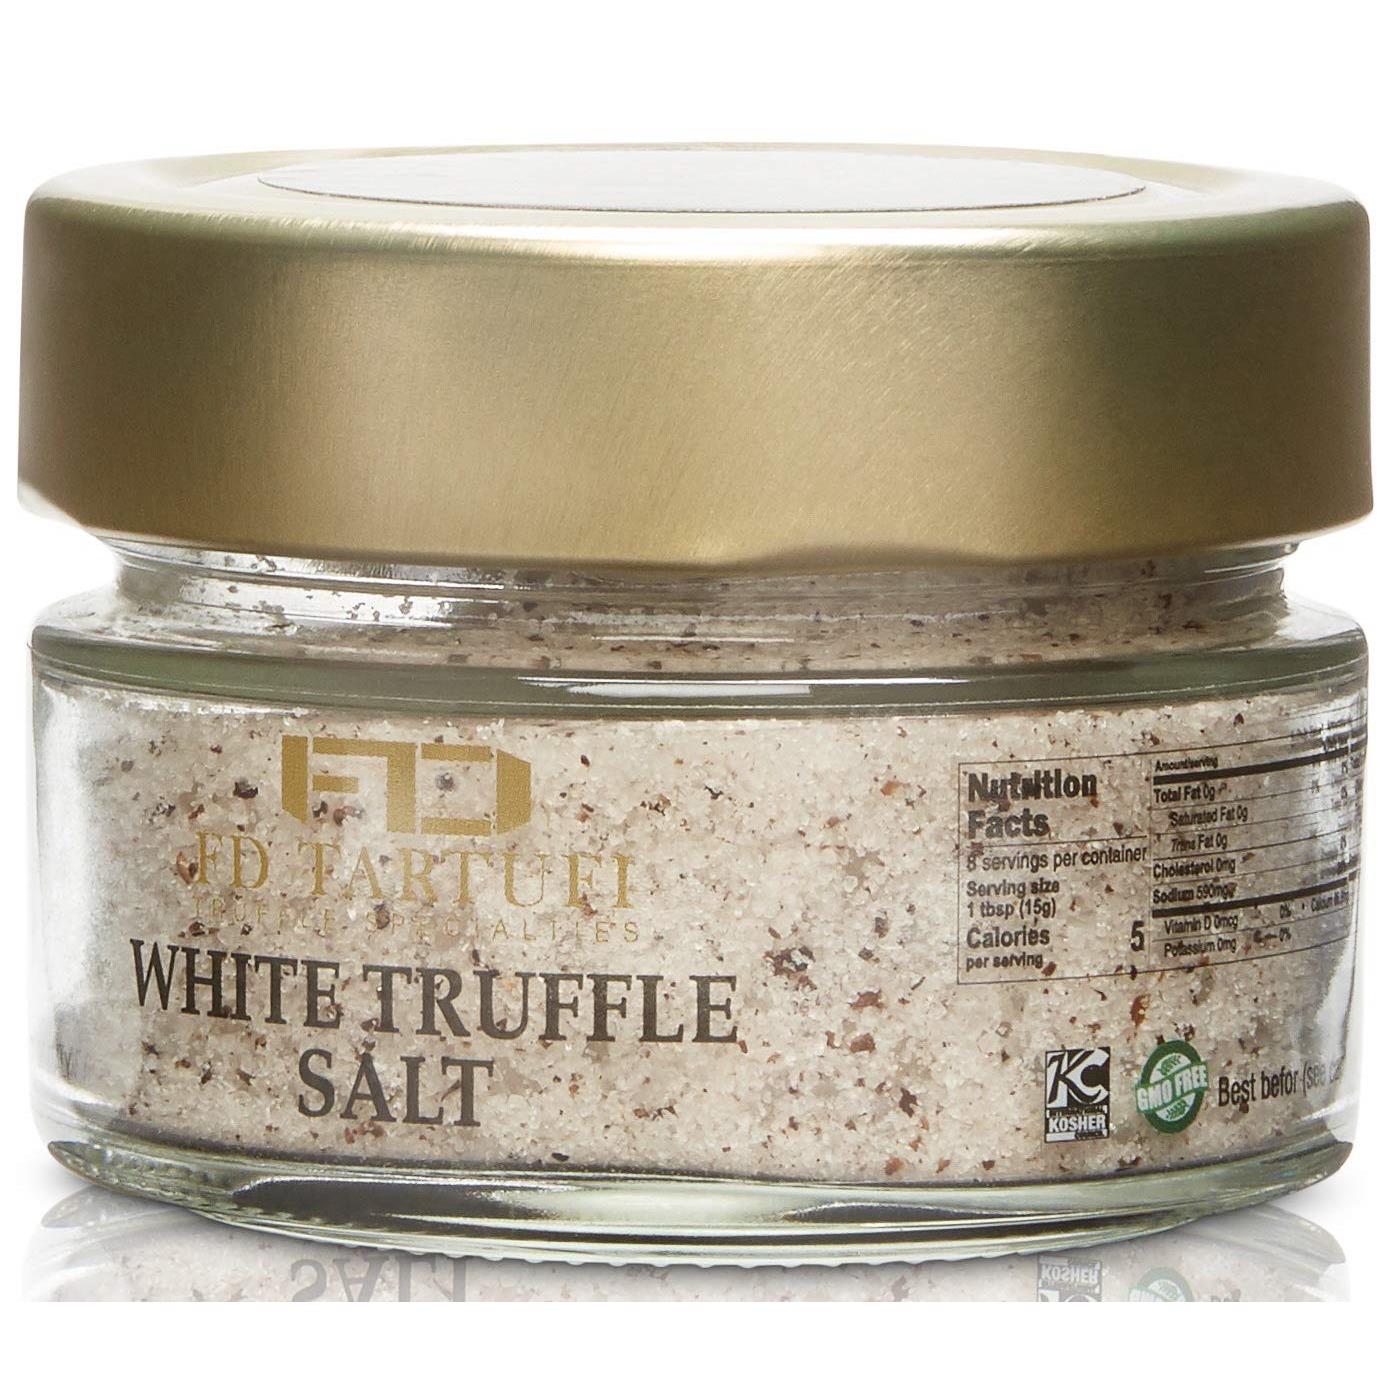 FD TARTUFI White Truffle Salt 120g (4.23oz), Coarse and Fine Natural Sea Salt | non gmo | Made in Italy | kosher | truffles